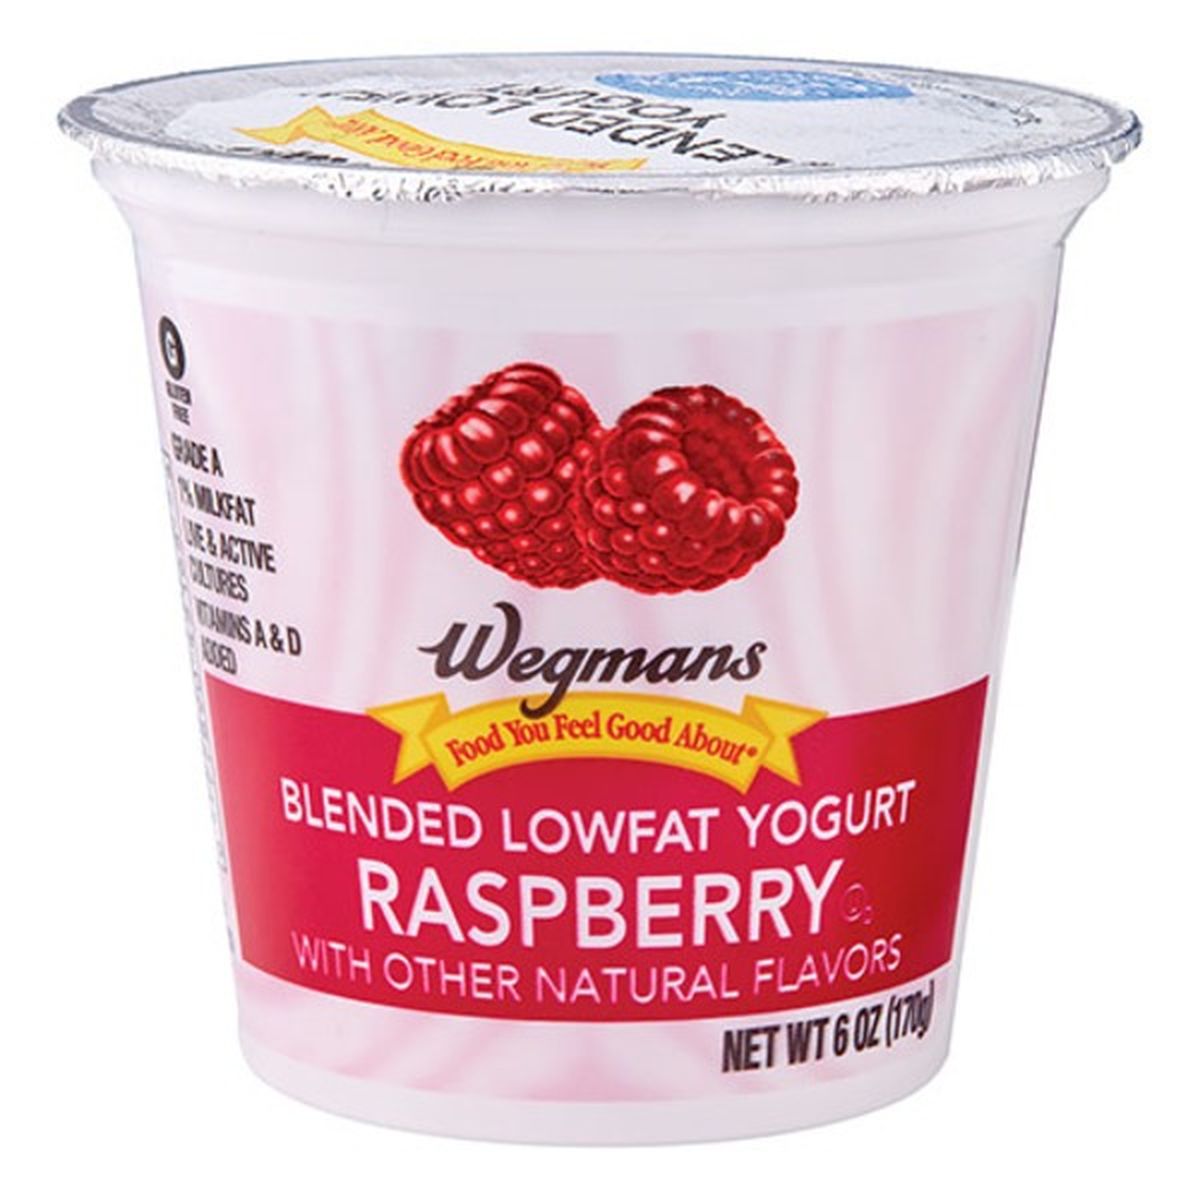 Calories in Wegmans Lowfat Blended Raspberry Yogurt